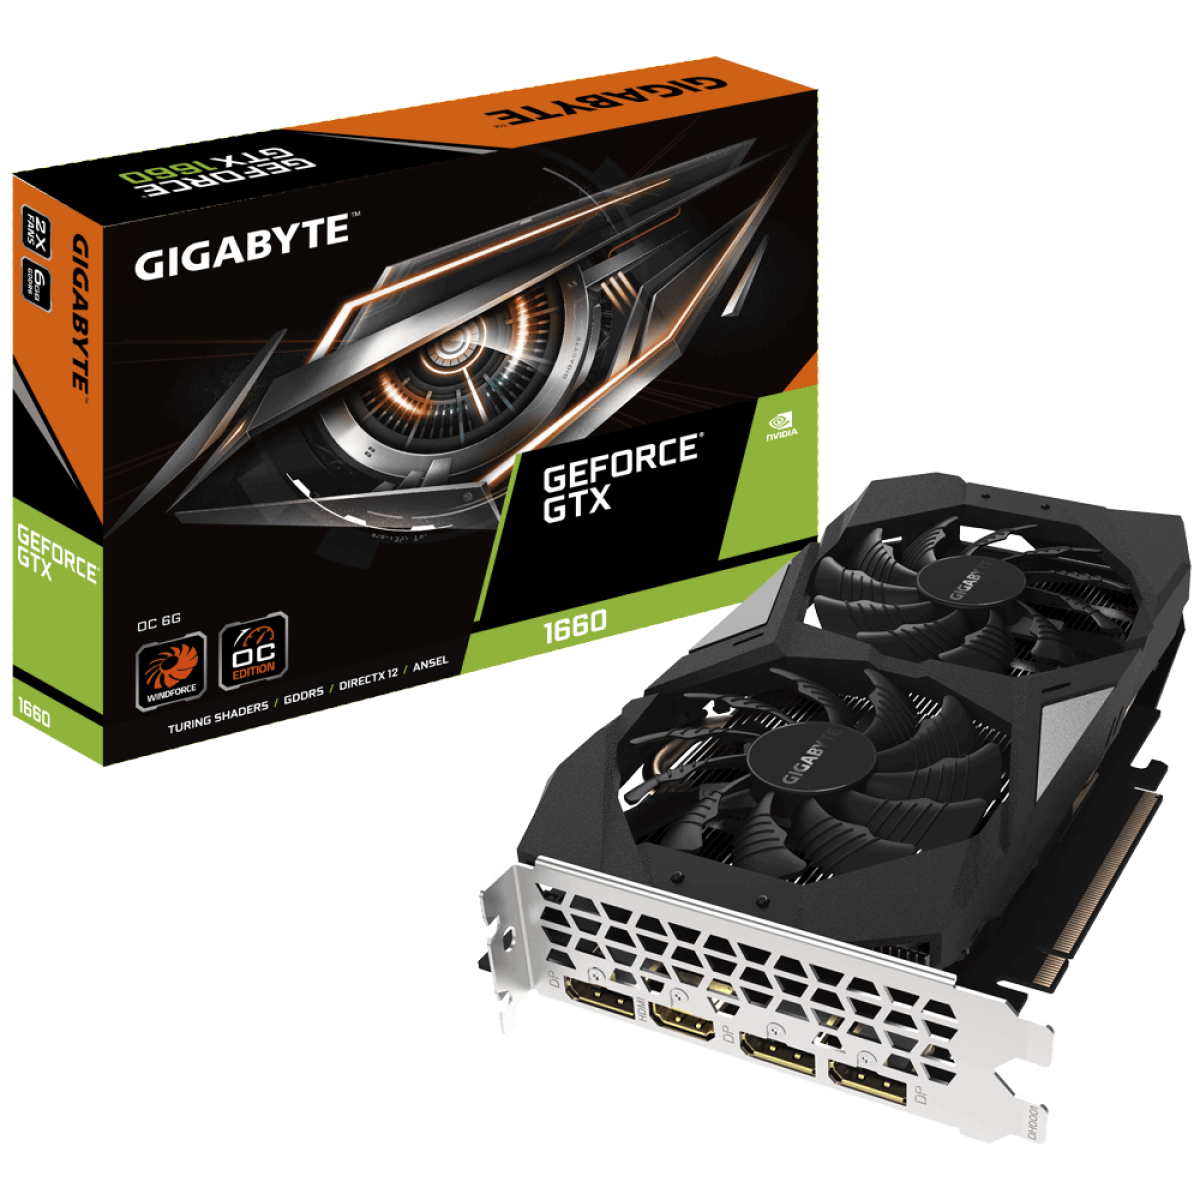 GIGABYTE GeForce GTX 1660 OC 6G WINDFORCE 6GB GDDR5